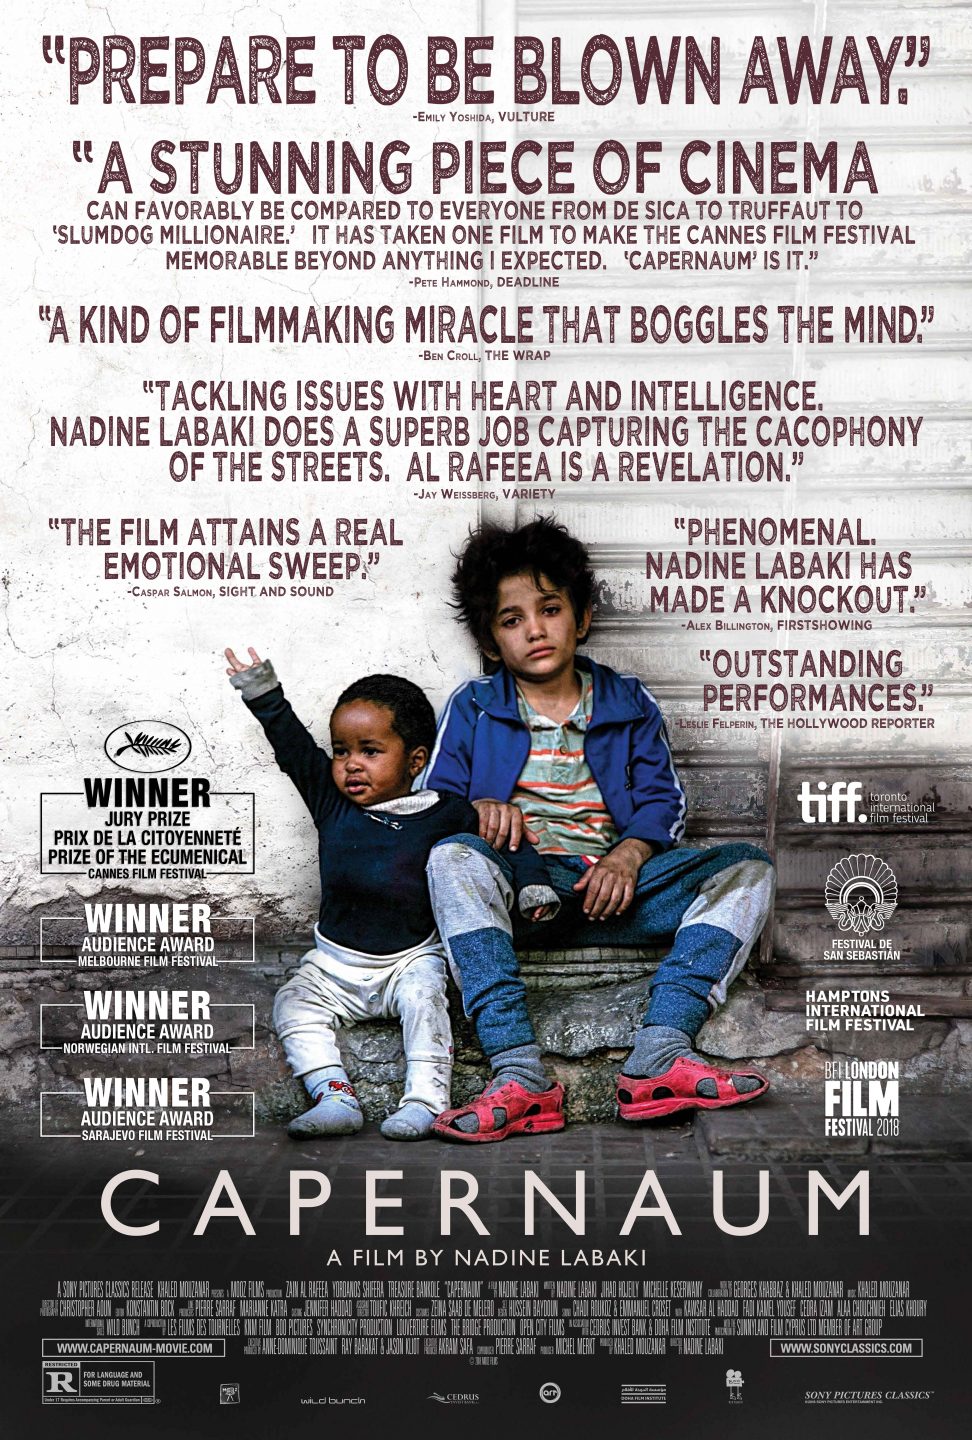 CAPERNAUM poster (Sony Pictures Classics)